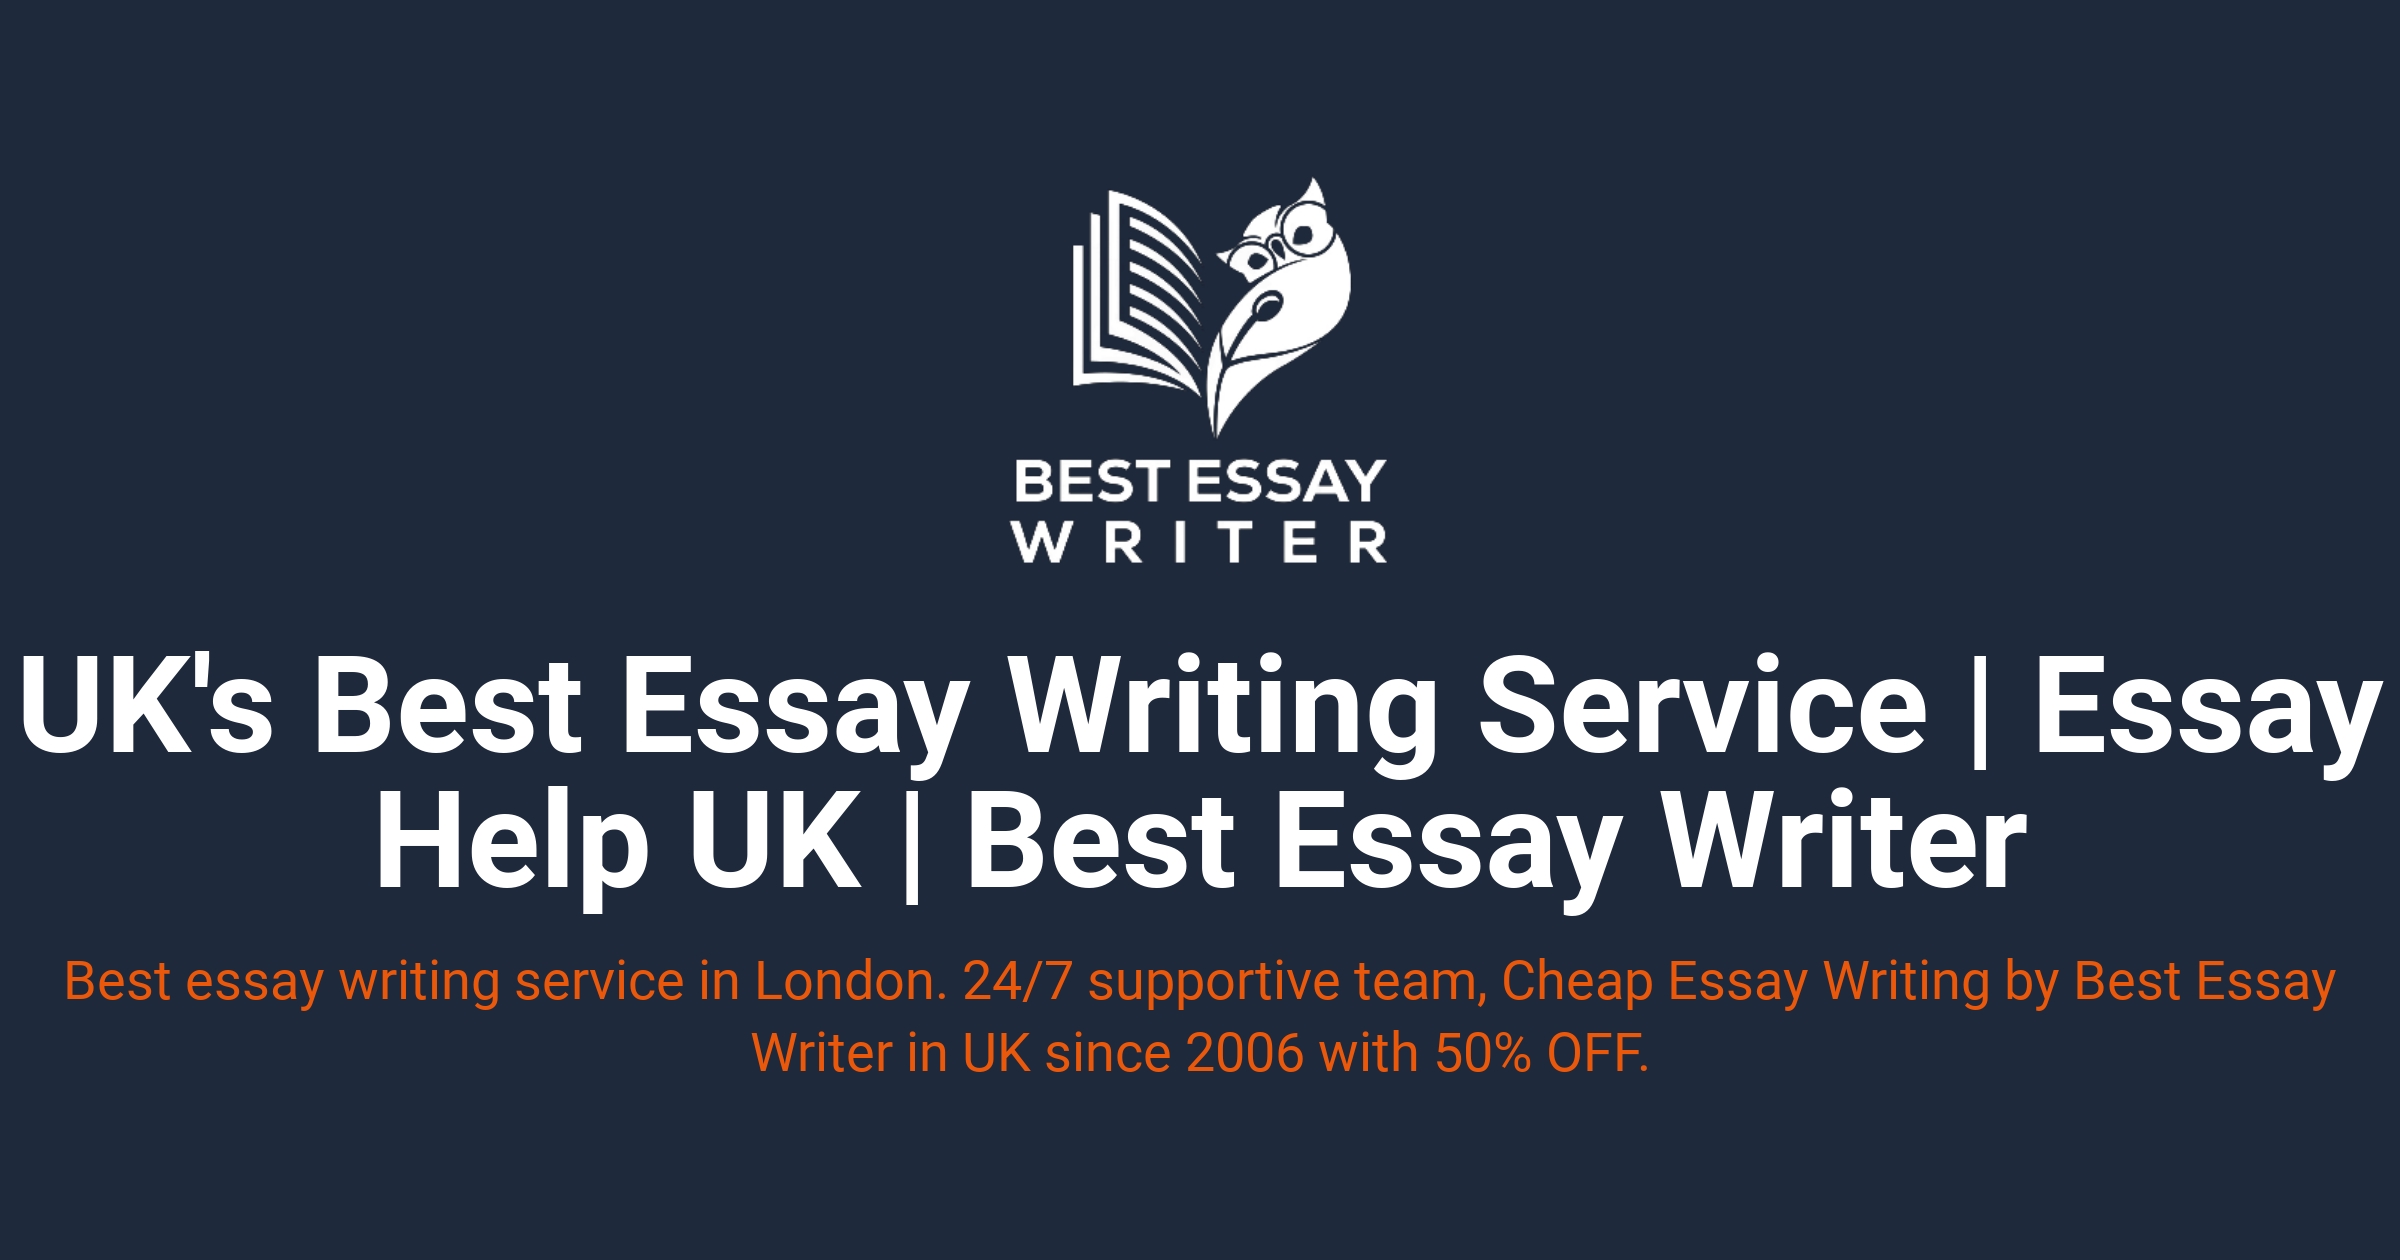 UK's Best Essay Writing Service | Essay Help UK | Best Essay Writer